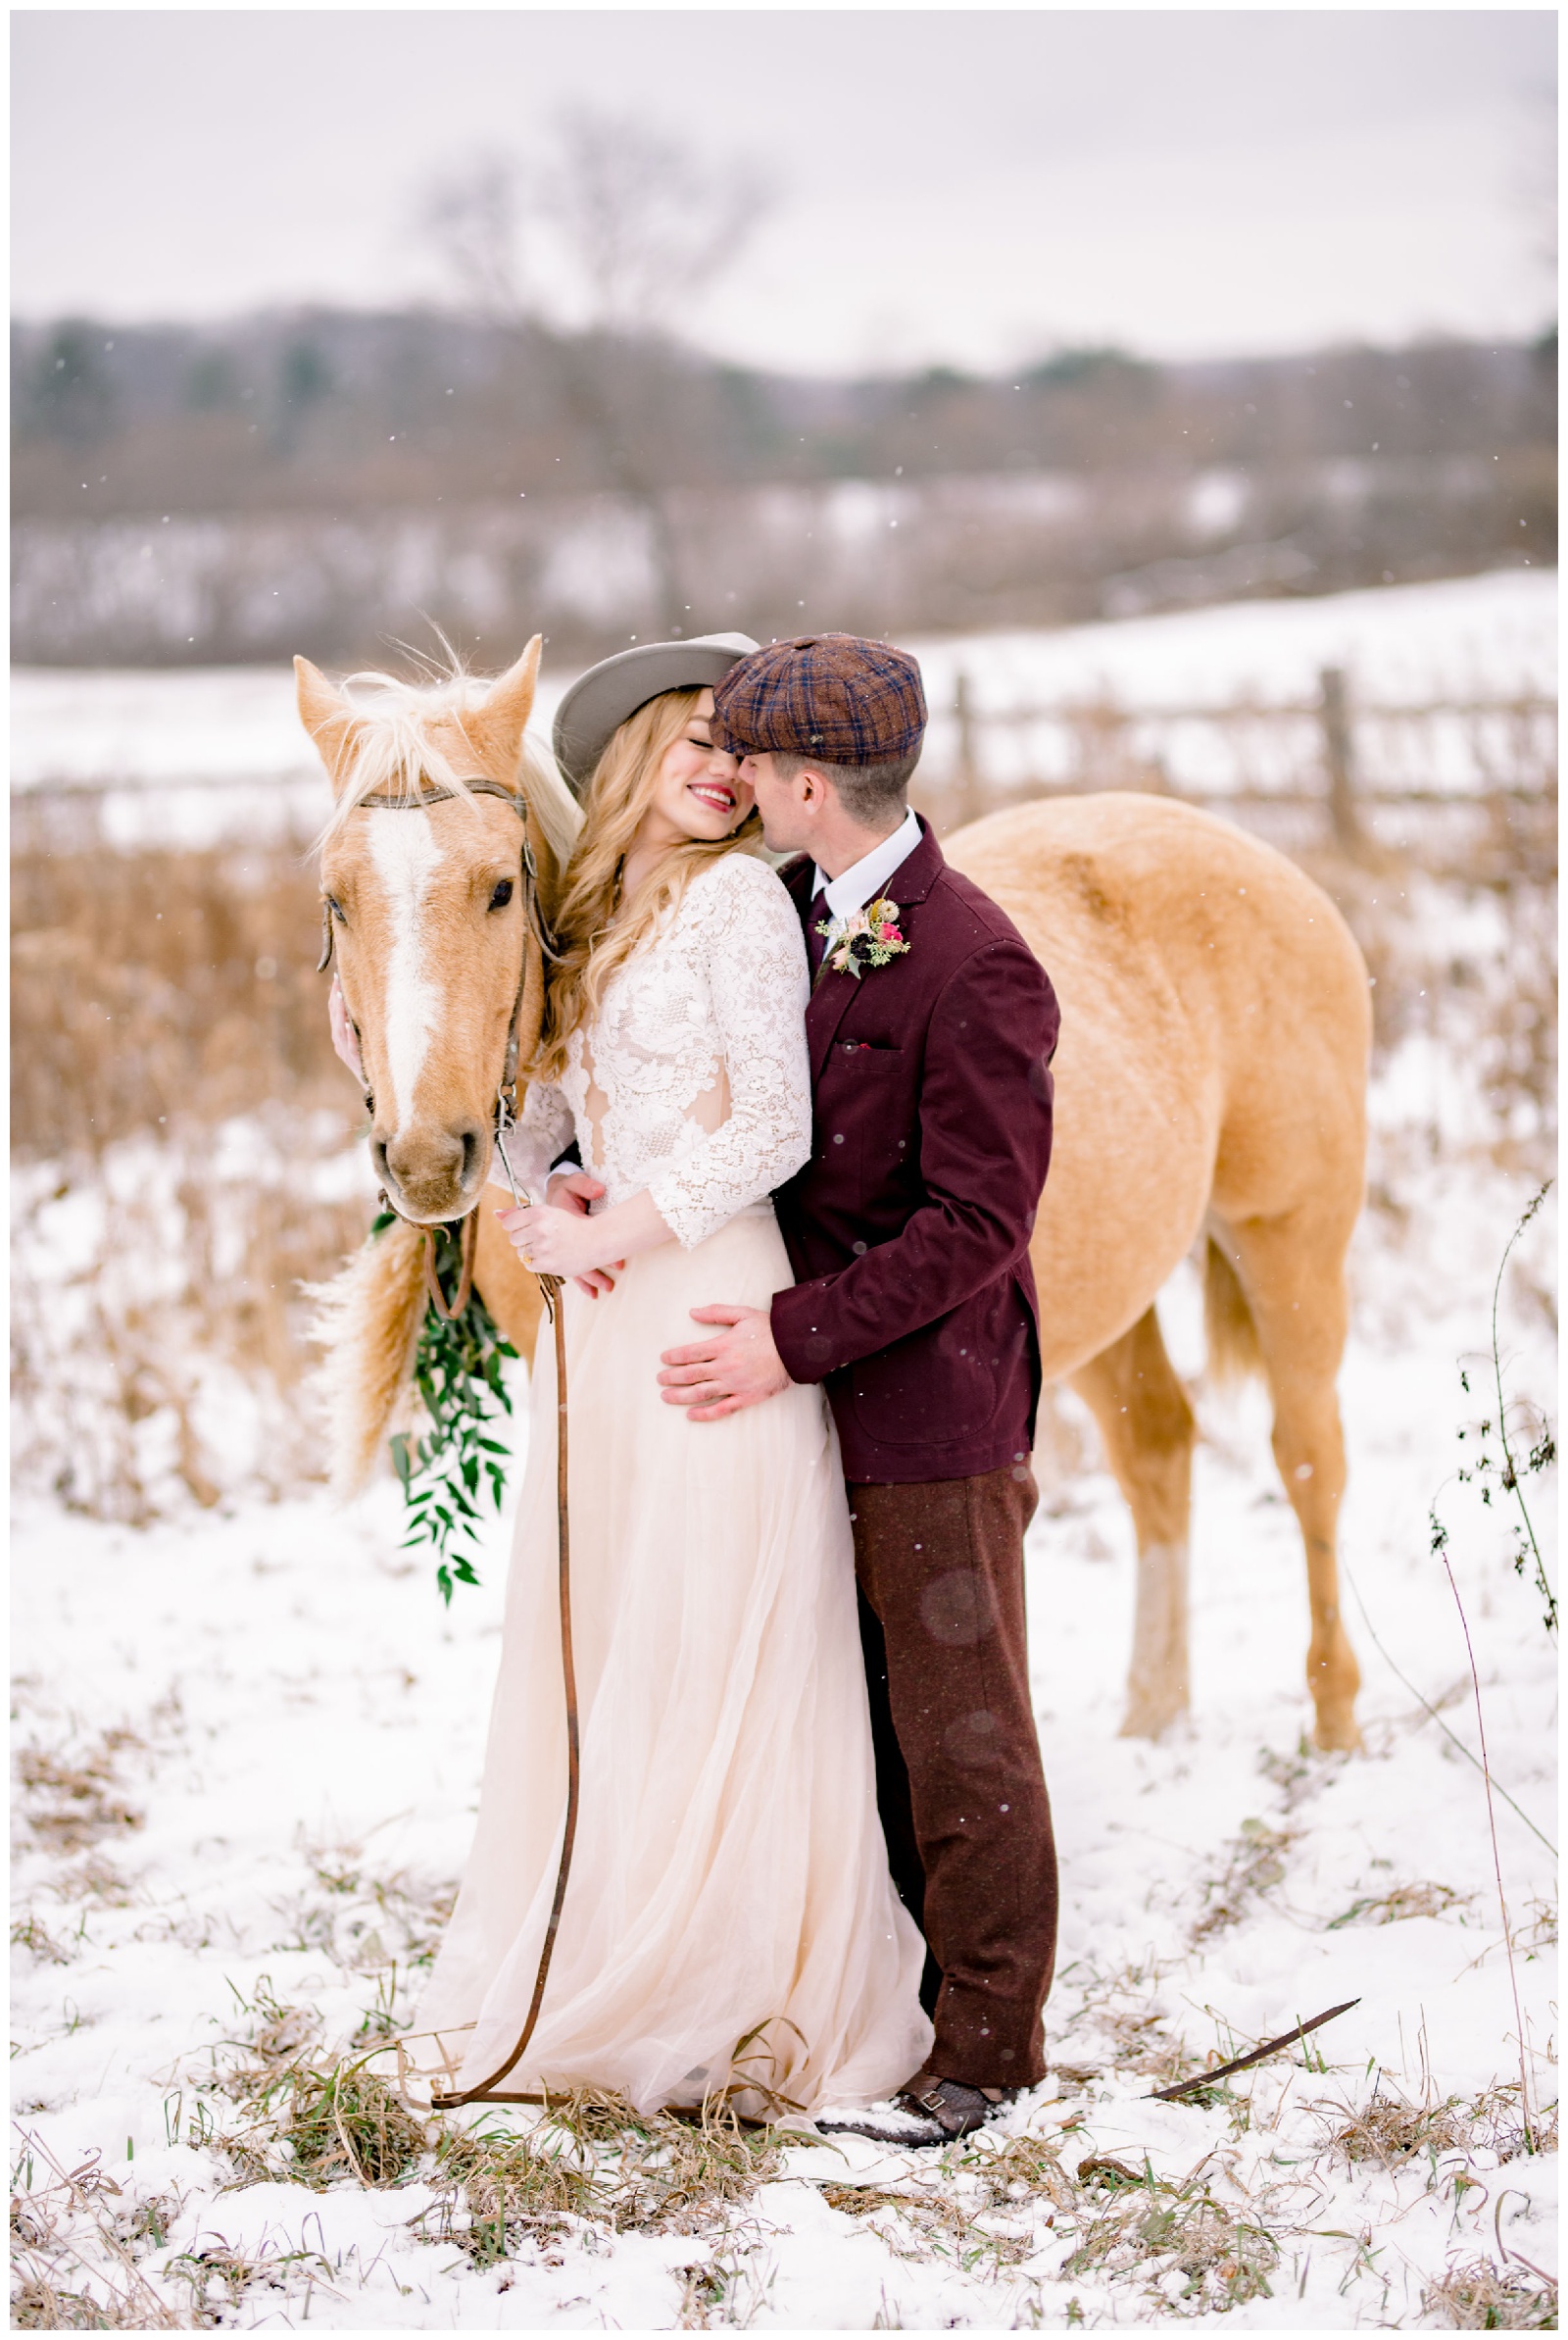 enchanted barn wedding hillsdale wisconsin photographer meghan lee harris winter equestrian horse